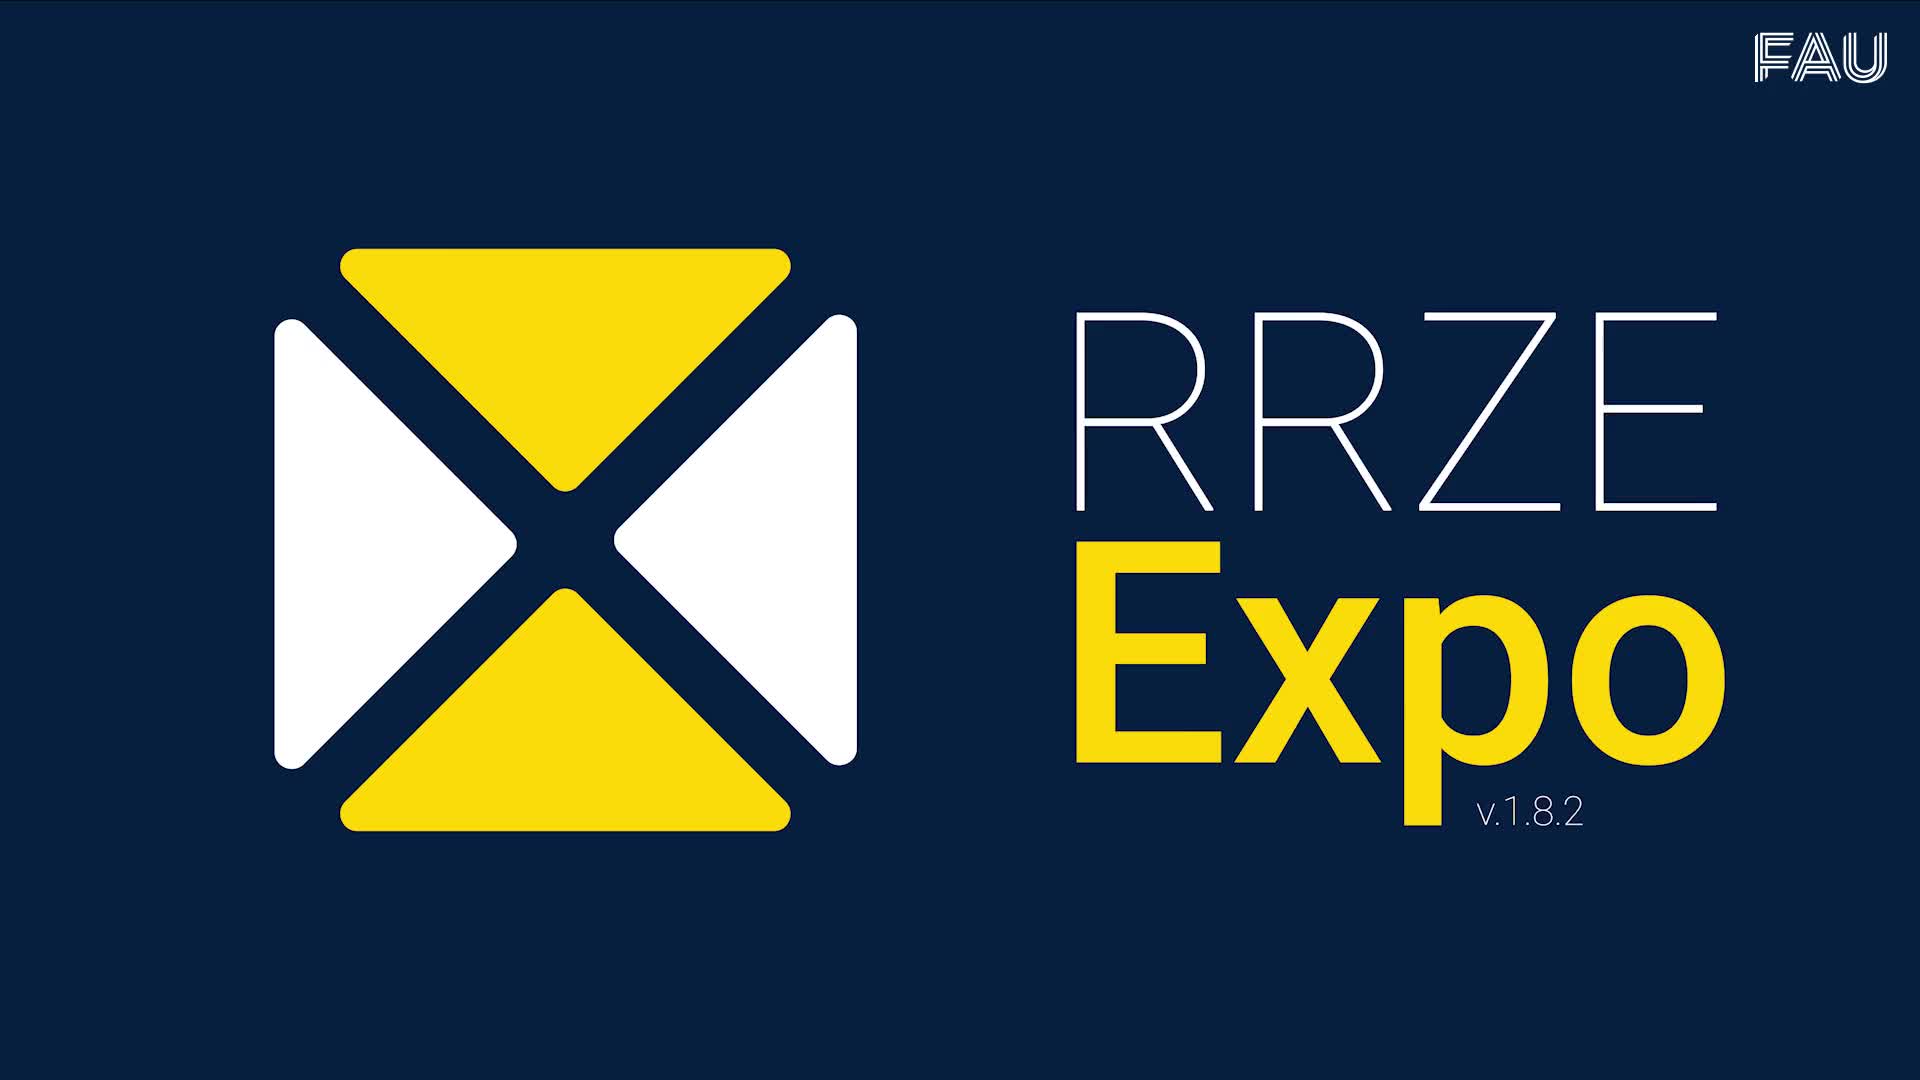 RRZE Expo - Das Foyer anlegen preview image